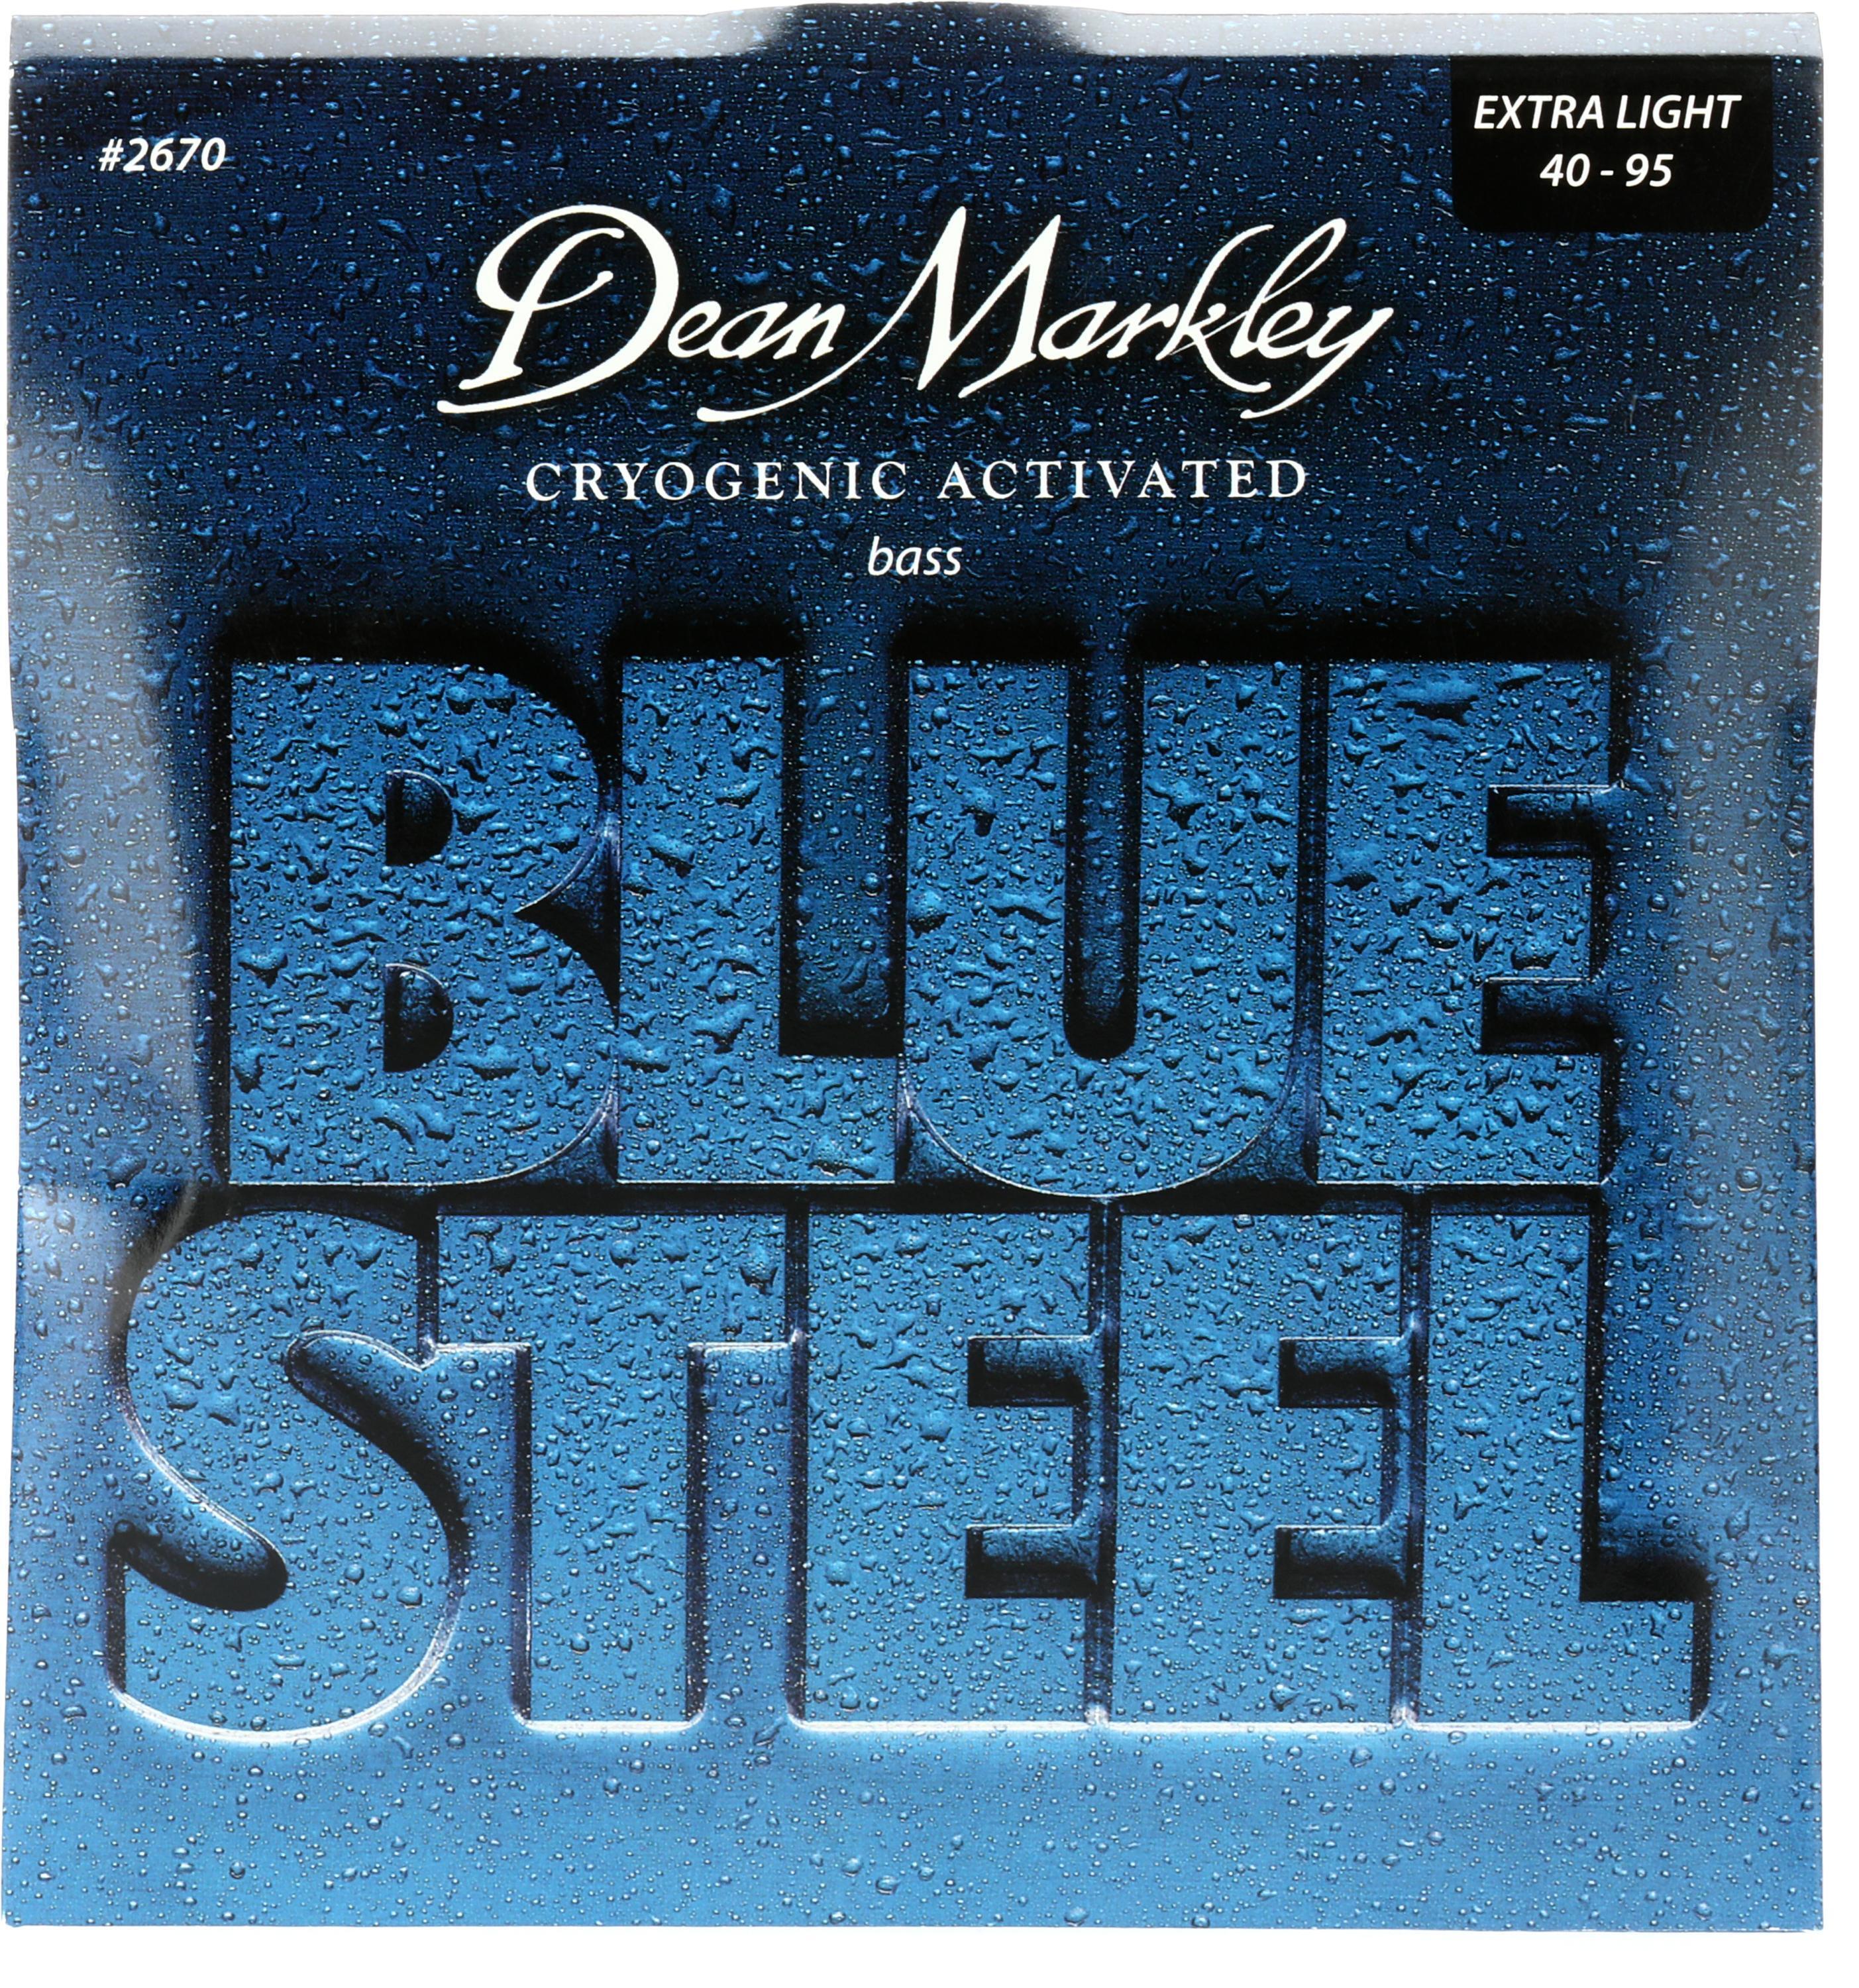 Bundled Item: Dean Markley 2670 Blue Steel Bass Guitar Strings - .040-.095 Extra Light